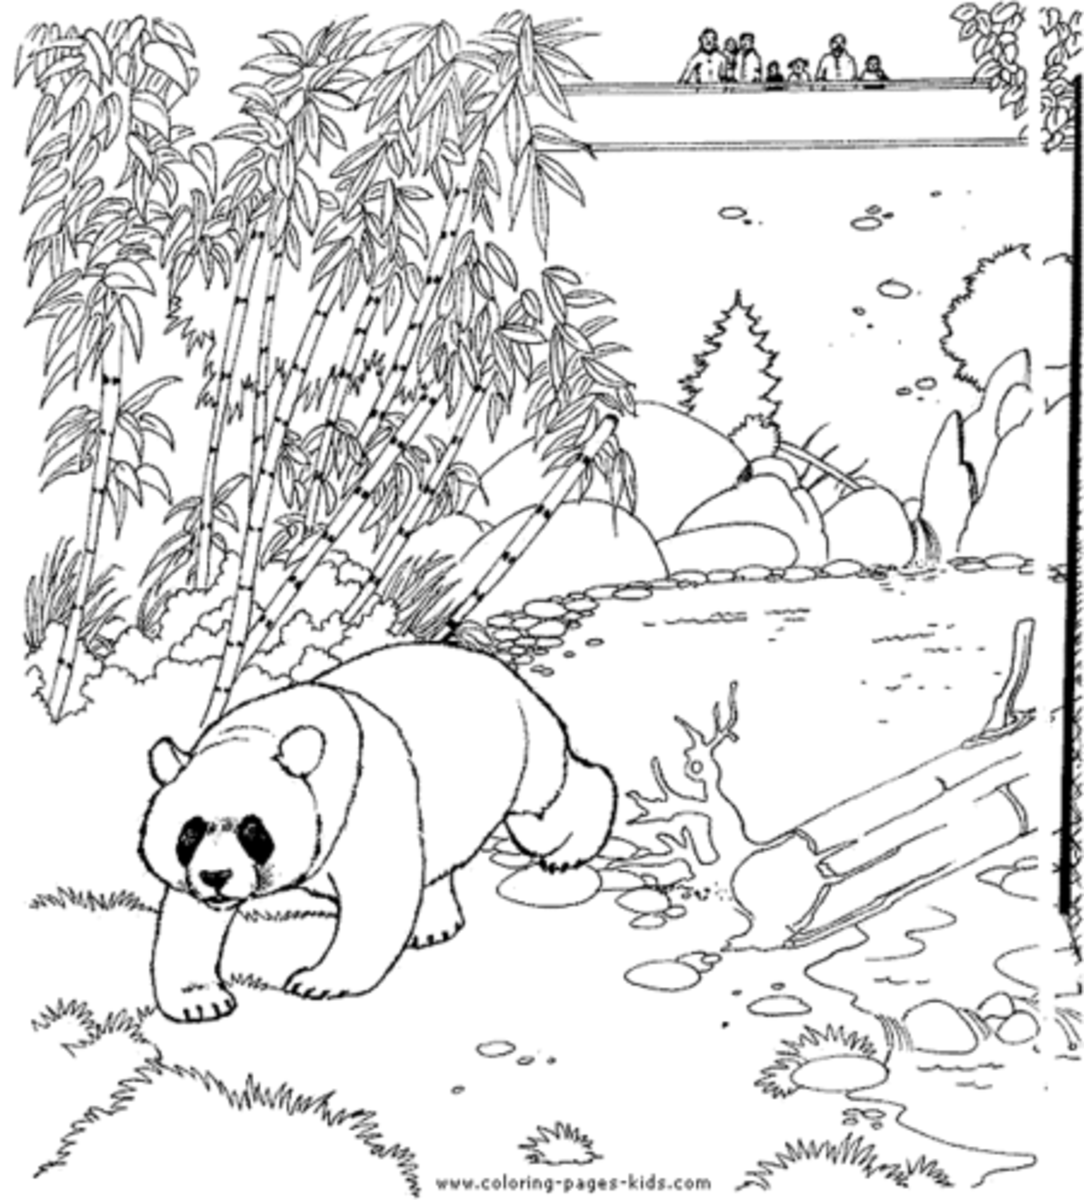 pandaprintablescoloringpages